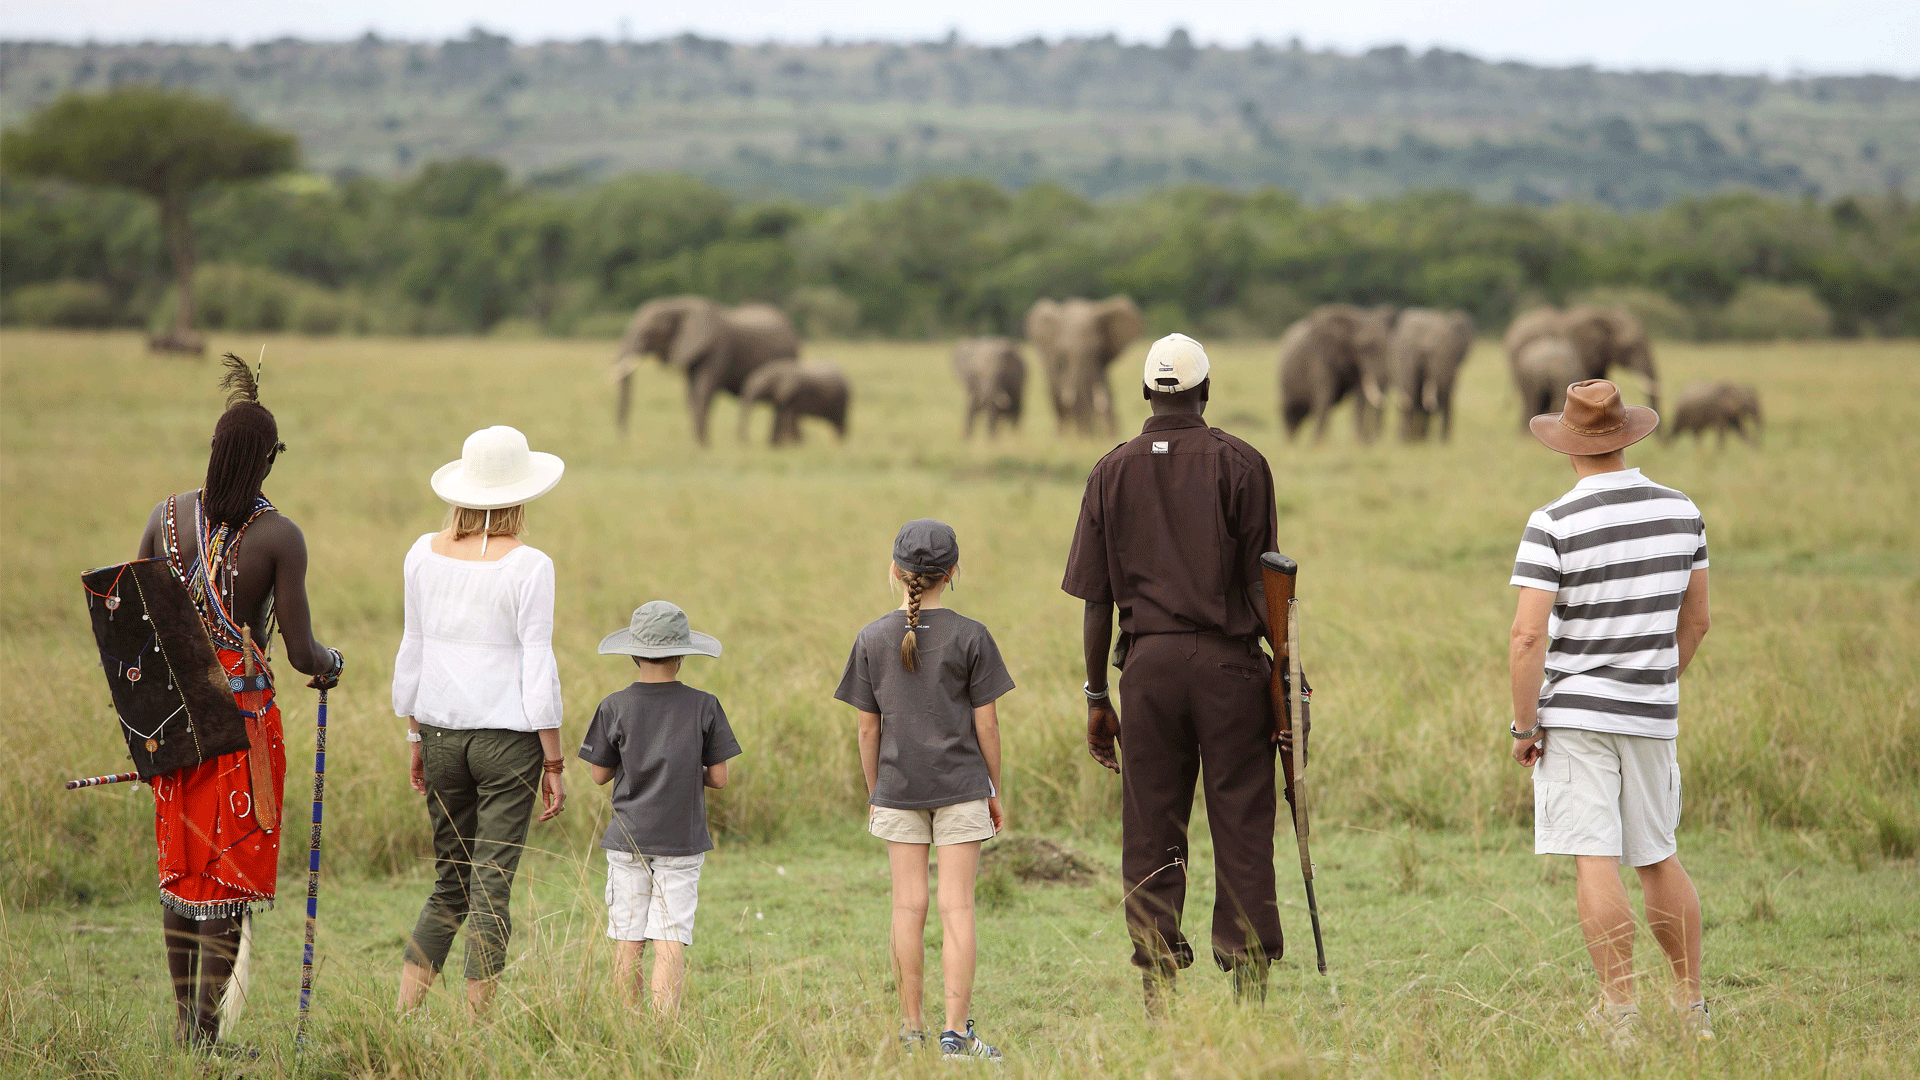 luxury family safari holidays